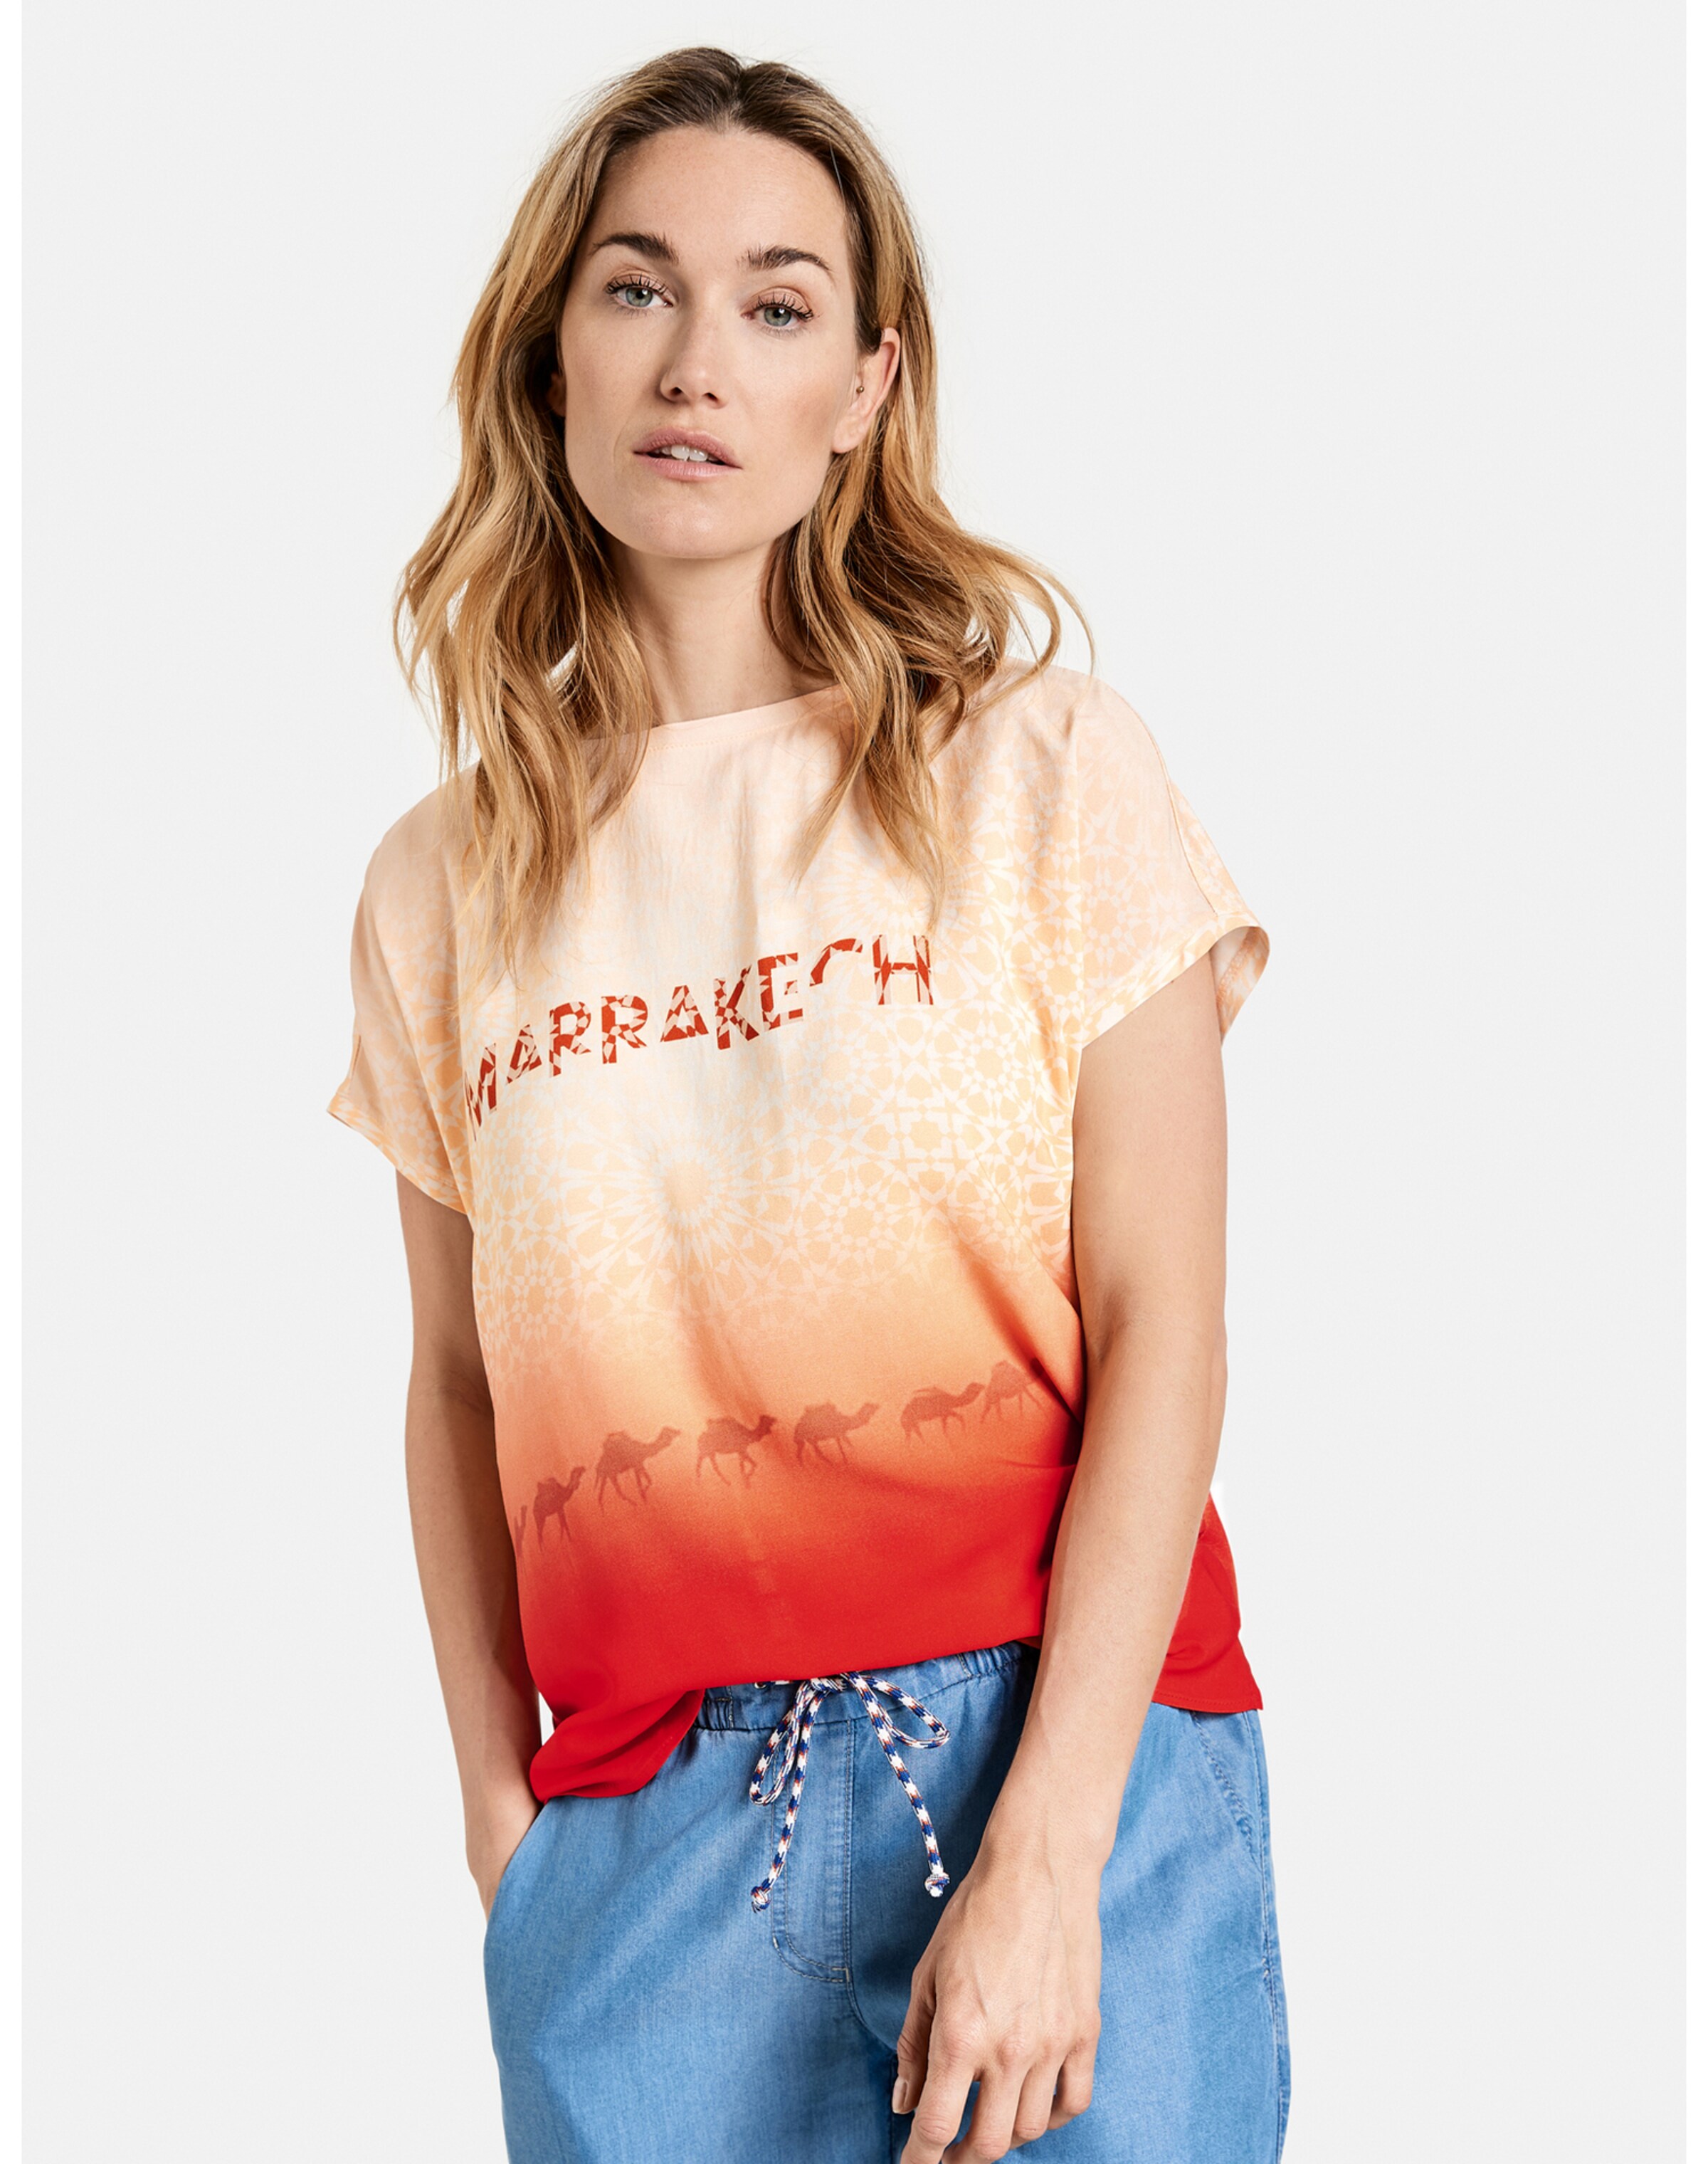 Frauen Shirts & Tops GERRY WEBER T-Shirt in Apricot, Pastellorange, Dunkelorange - RI03994